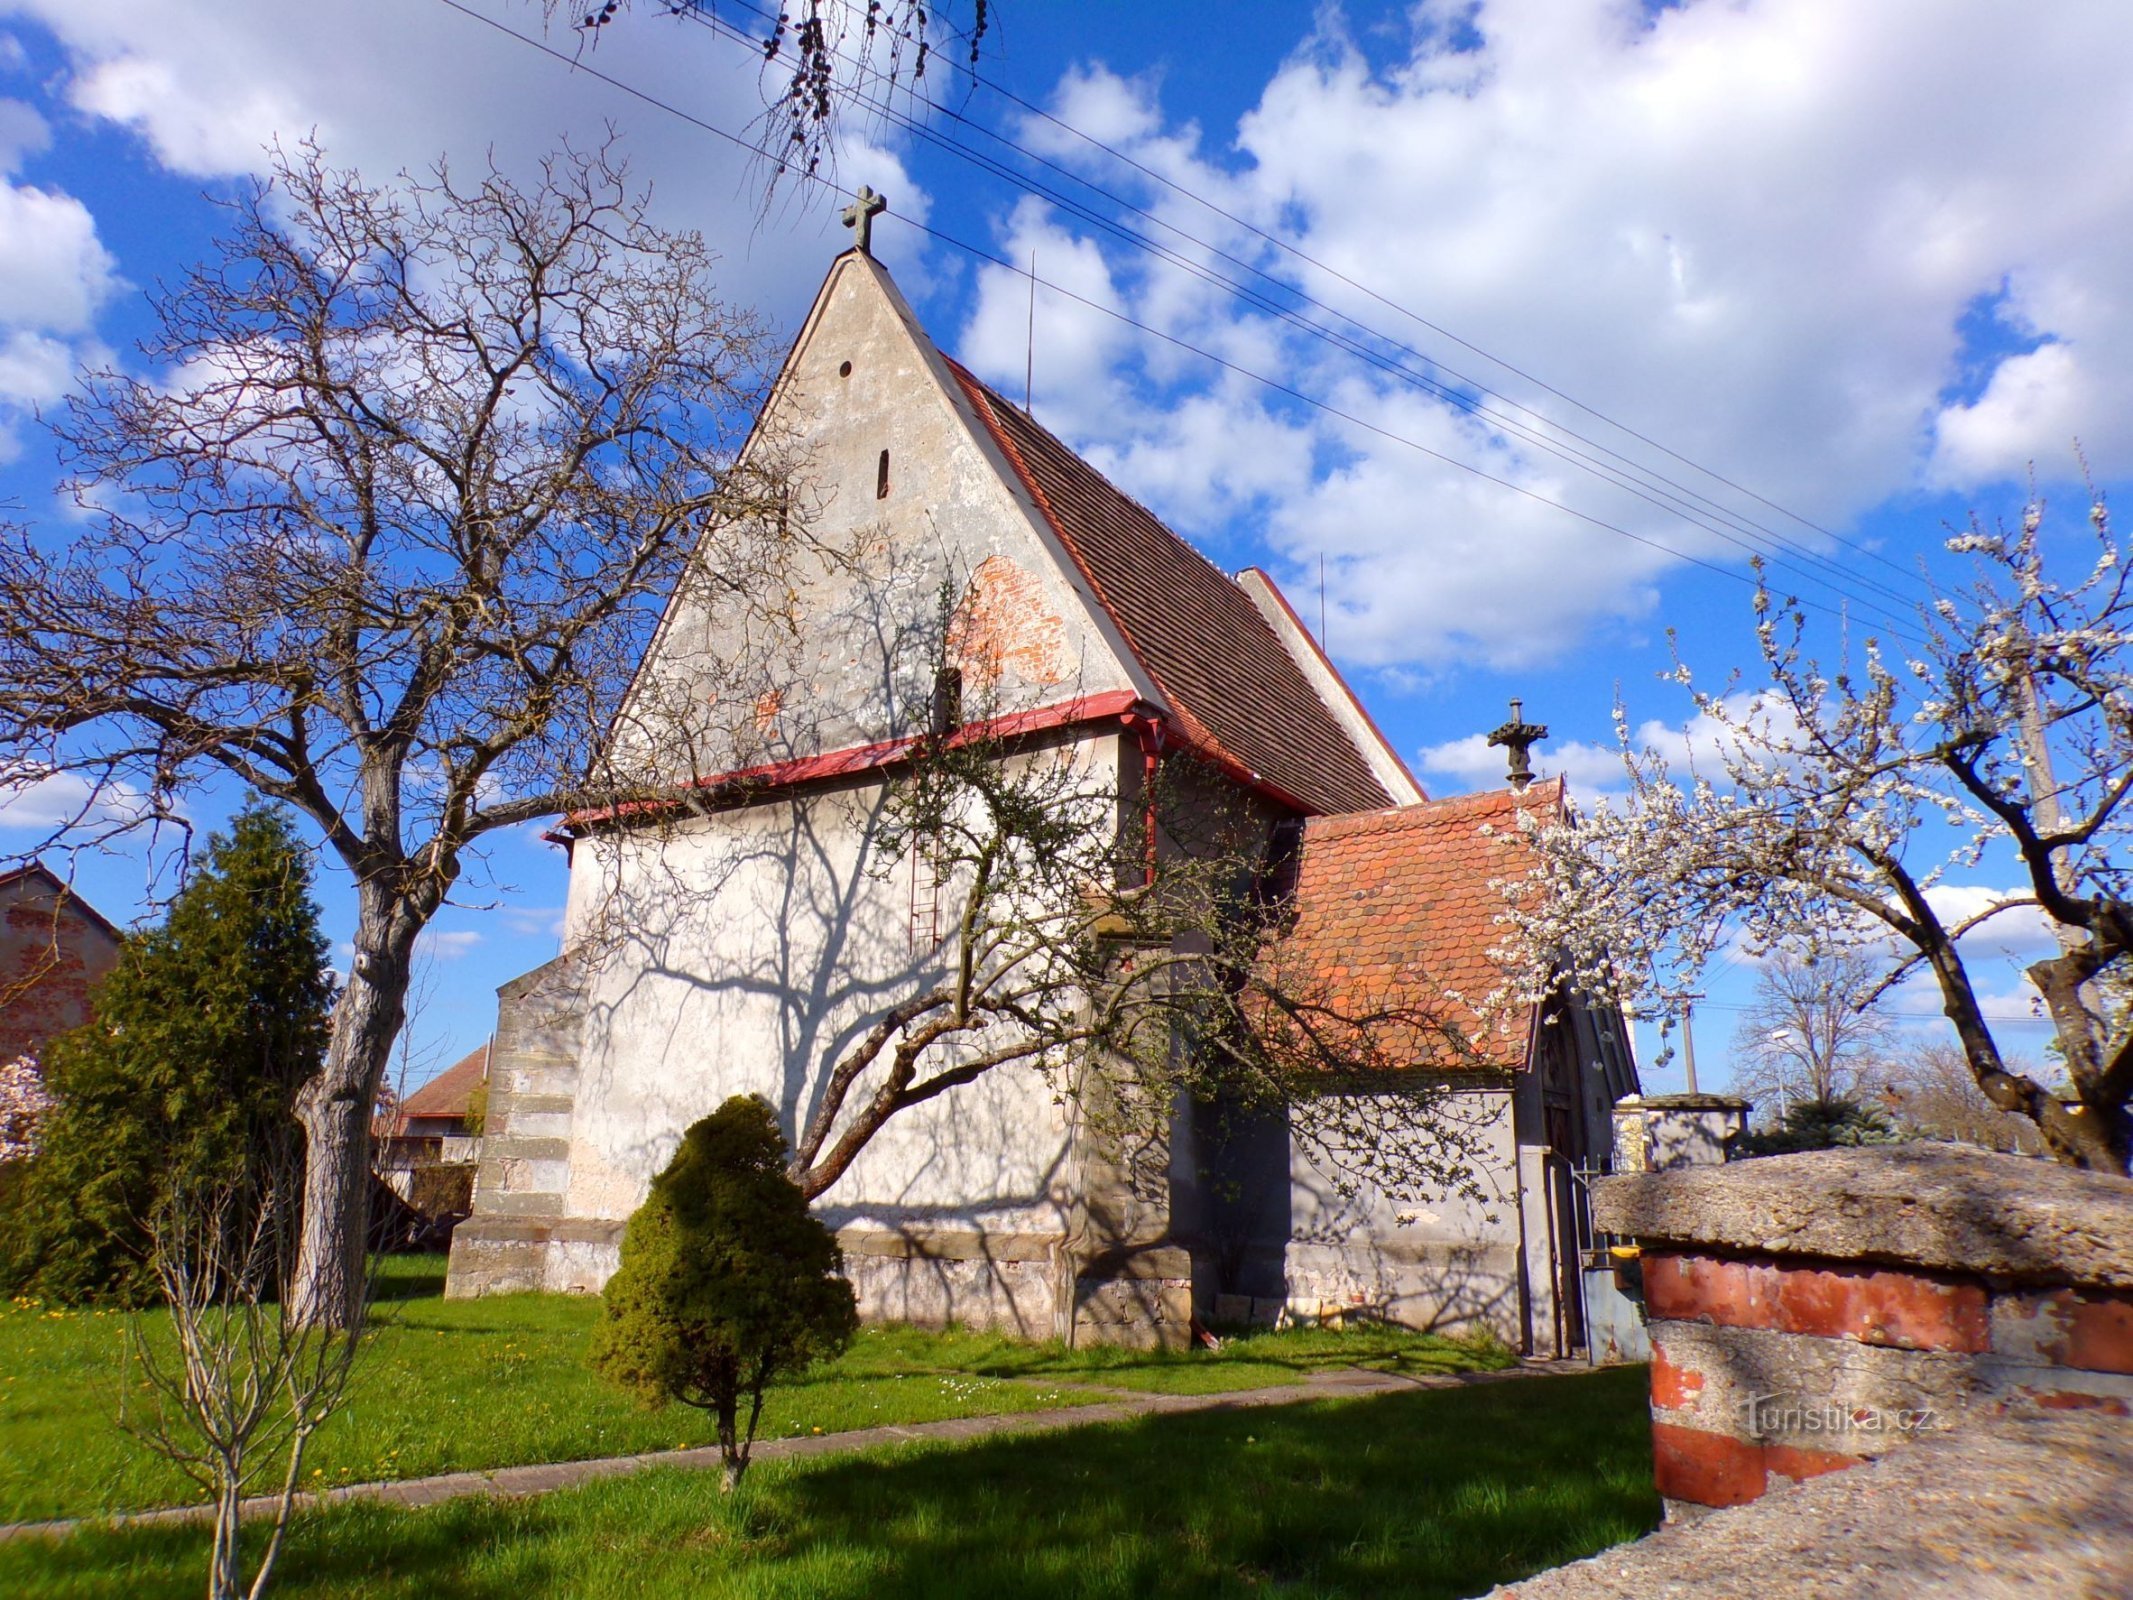 Kirche St. Václav in Rosice nad Labem (Pardubice, 23.4.2022. April XNUMX)